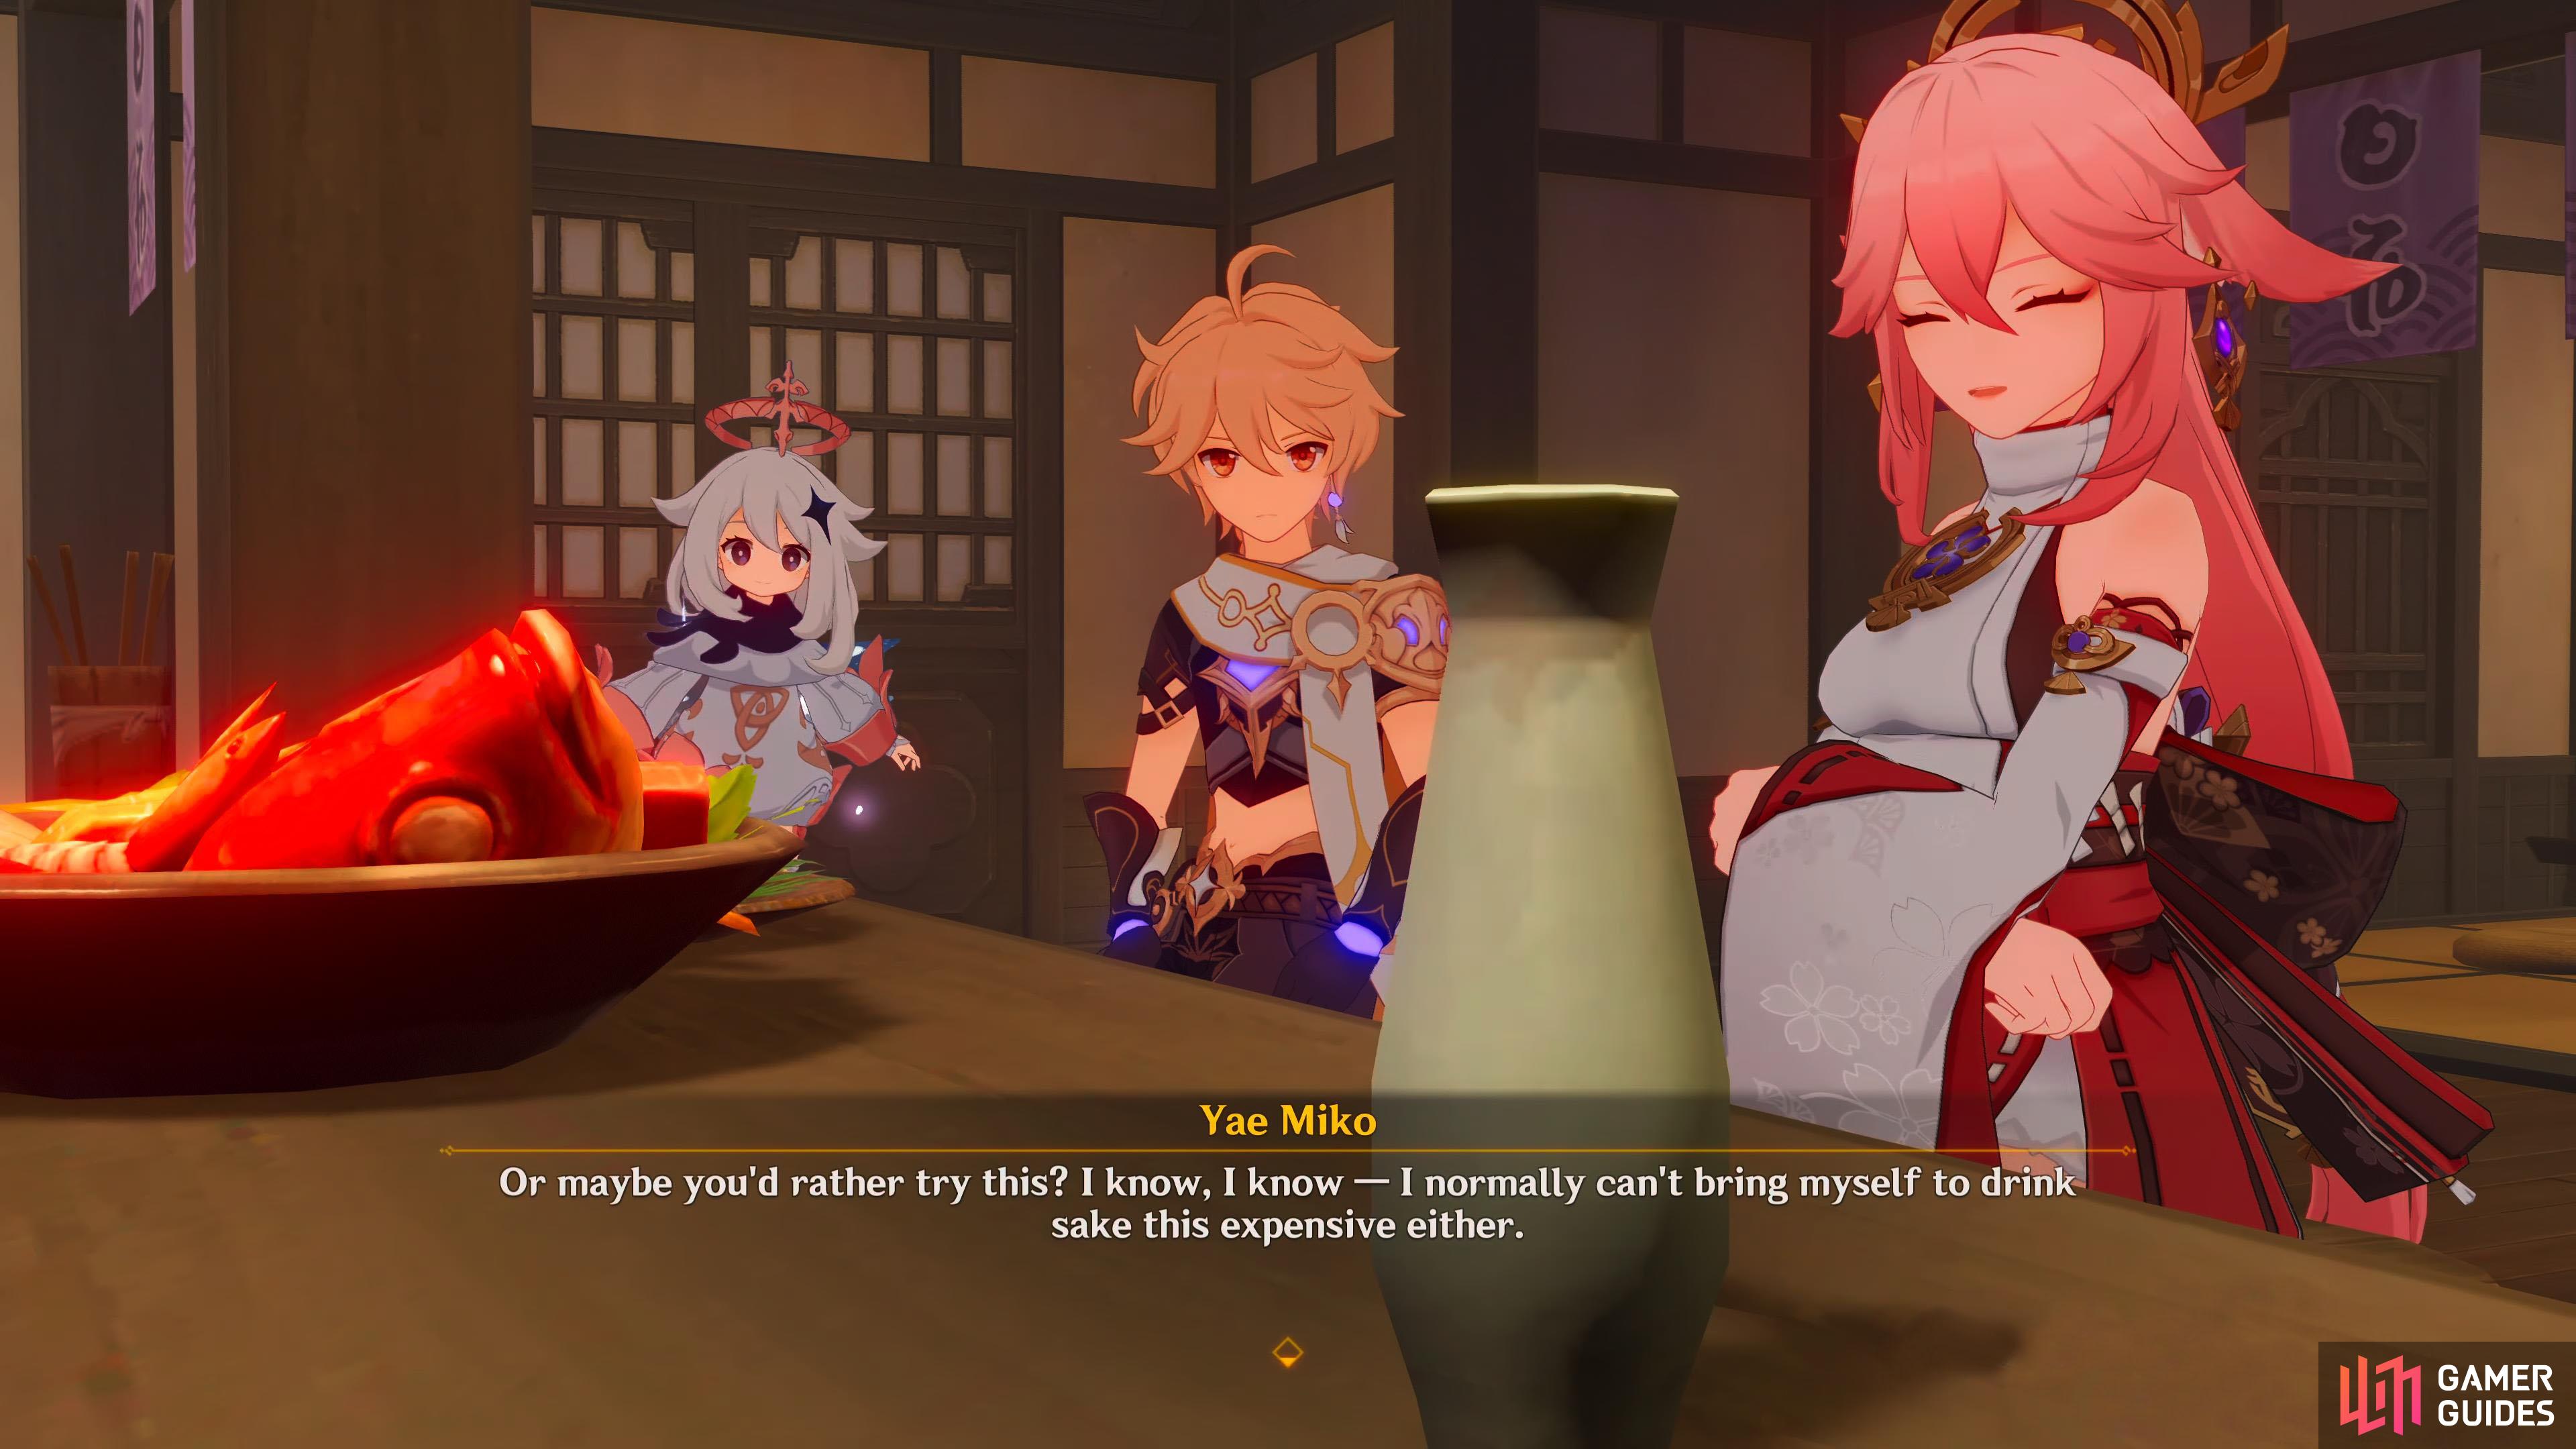 Yae Miko is enjoying her lavish meal at your expense.